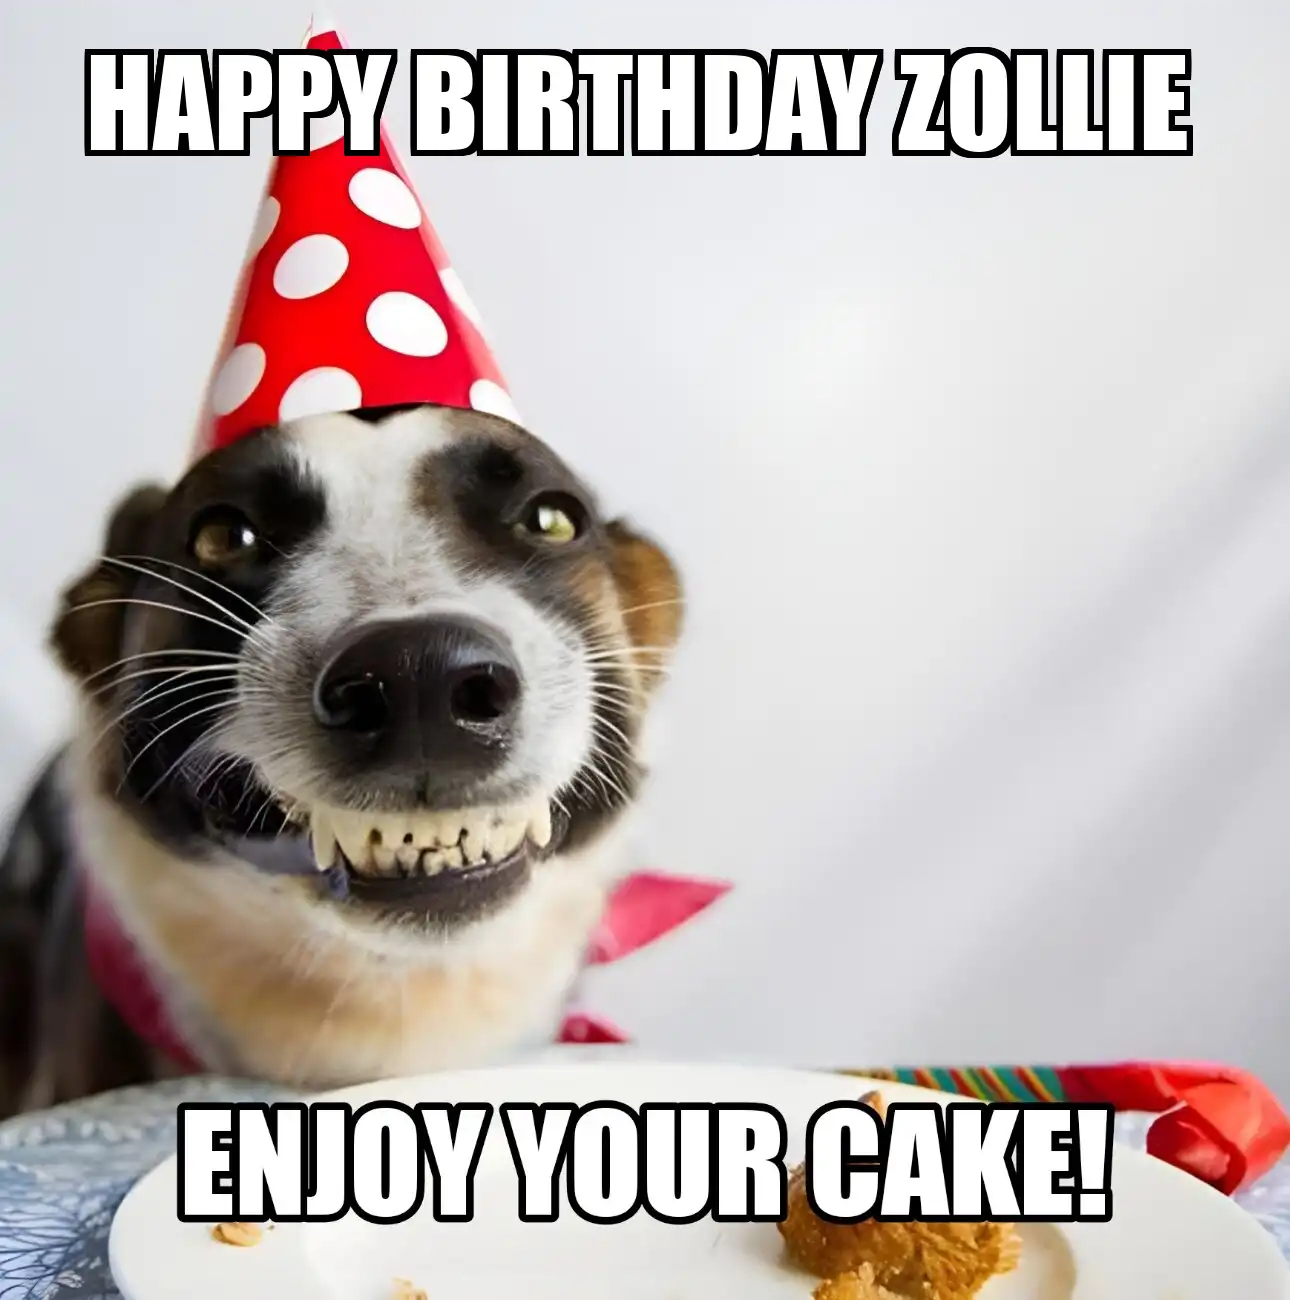 Happy Birthday Zollie Enjoy Your Cake Dog Meme